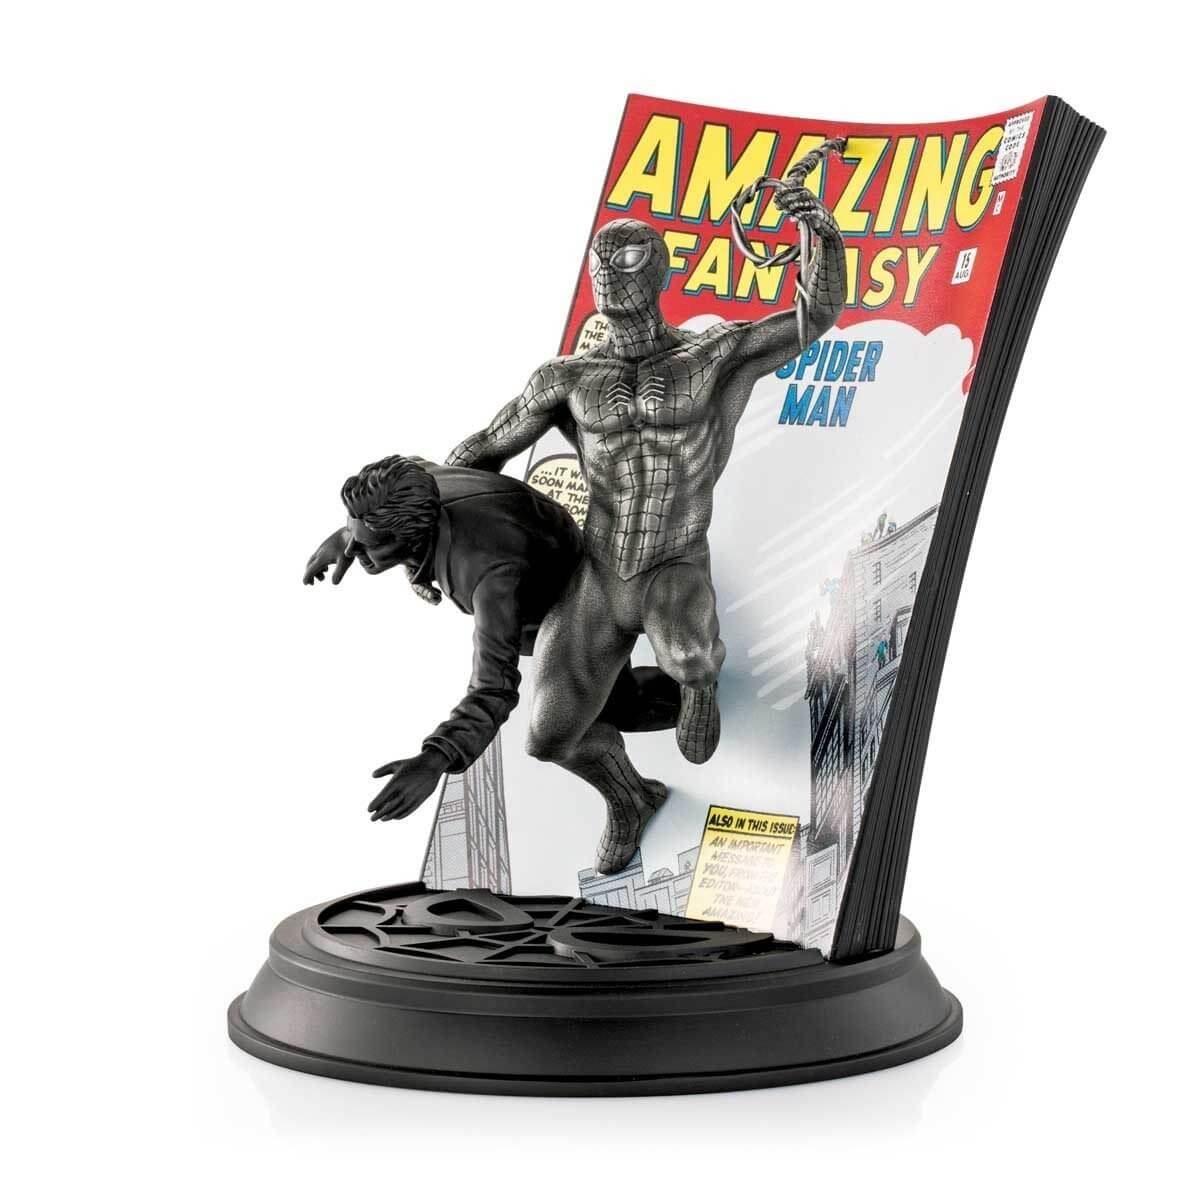 Spider-Man Amazing Fantasy #15 Limited Edition Figurine - Marvel Statue